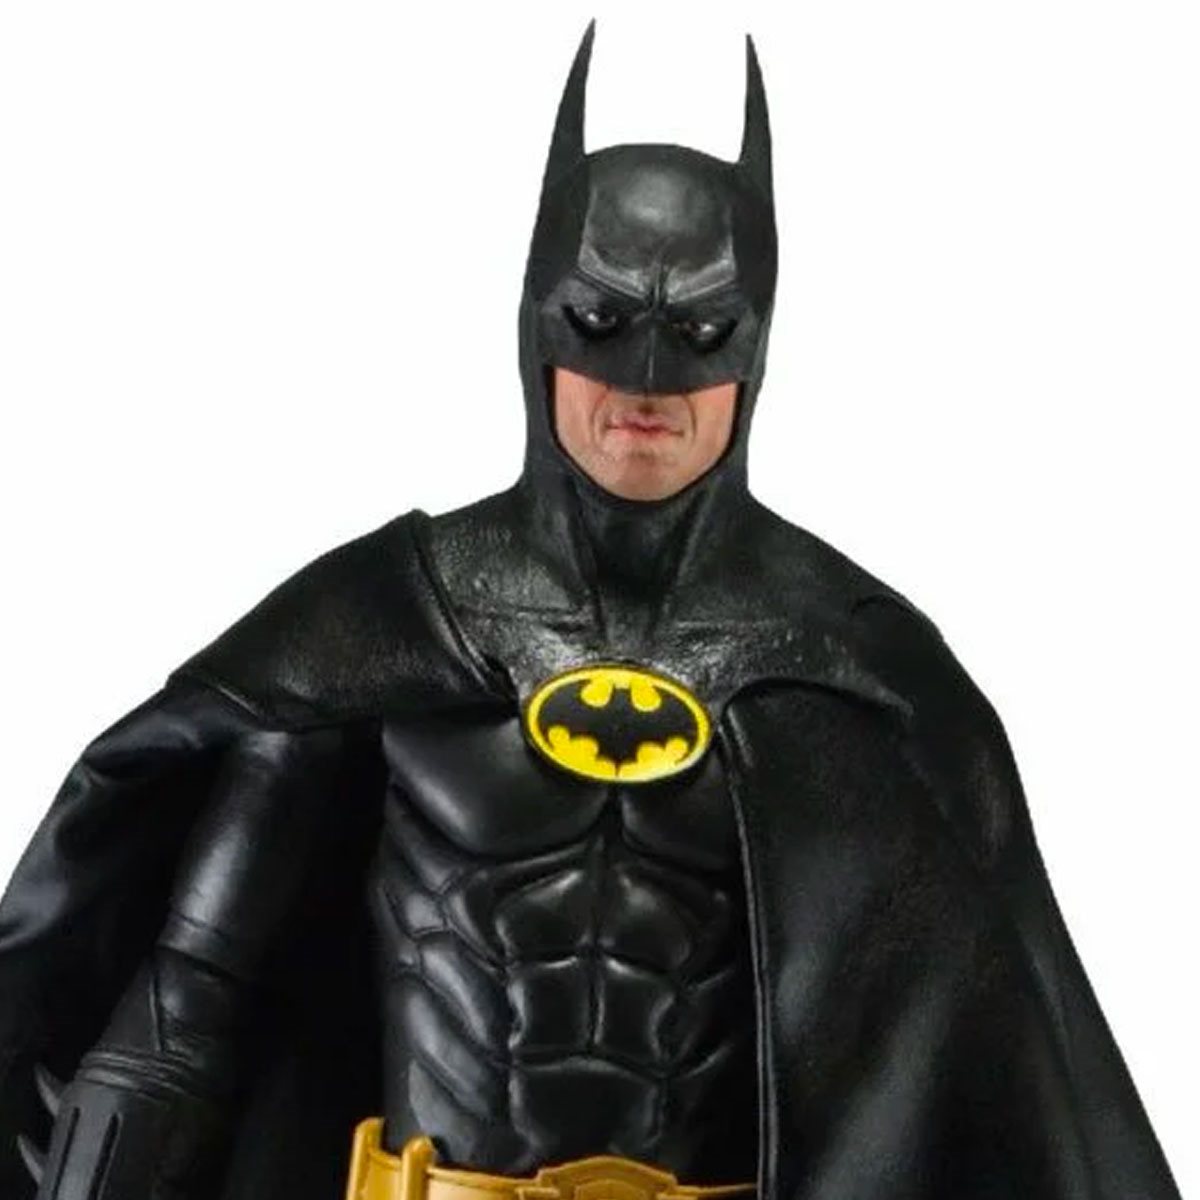 1989 Batman Action Figure - Michael Keaton Batman Action Figure